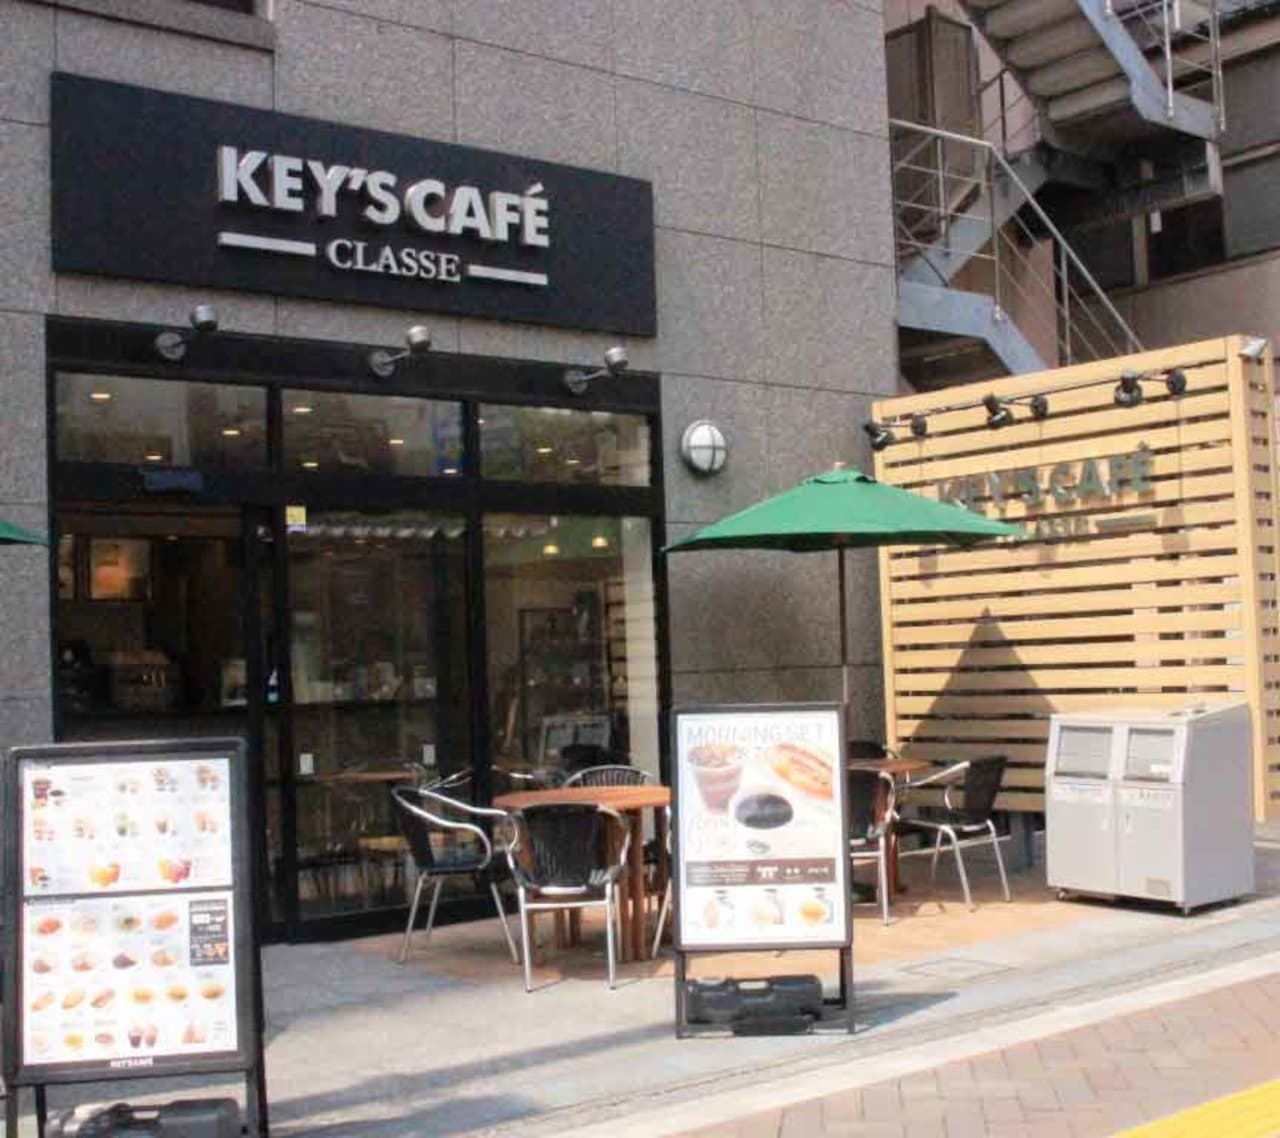 KEY'S CAFE「ピスタチオクリームラテ」